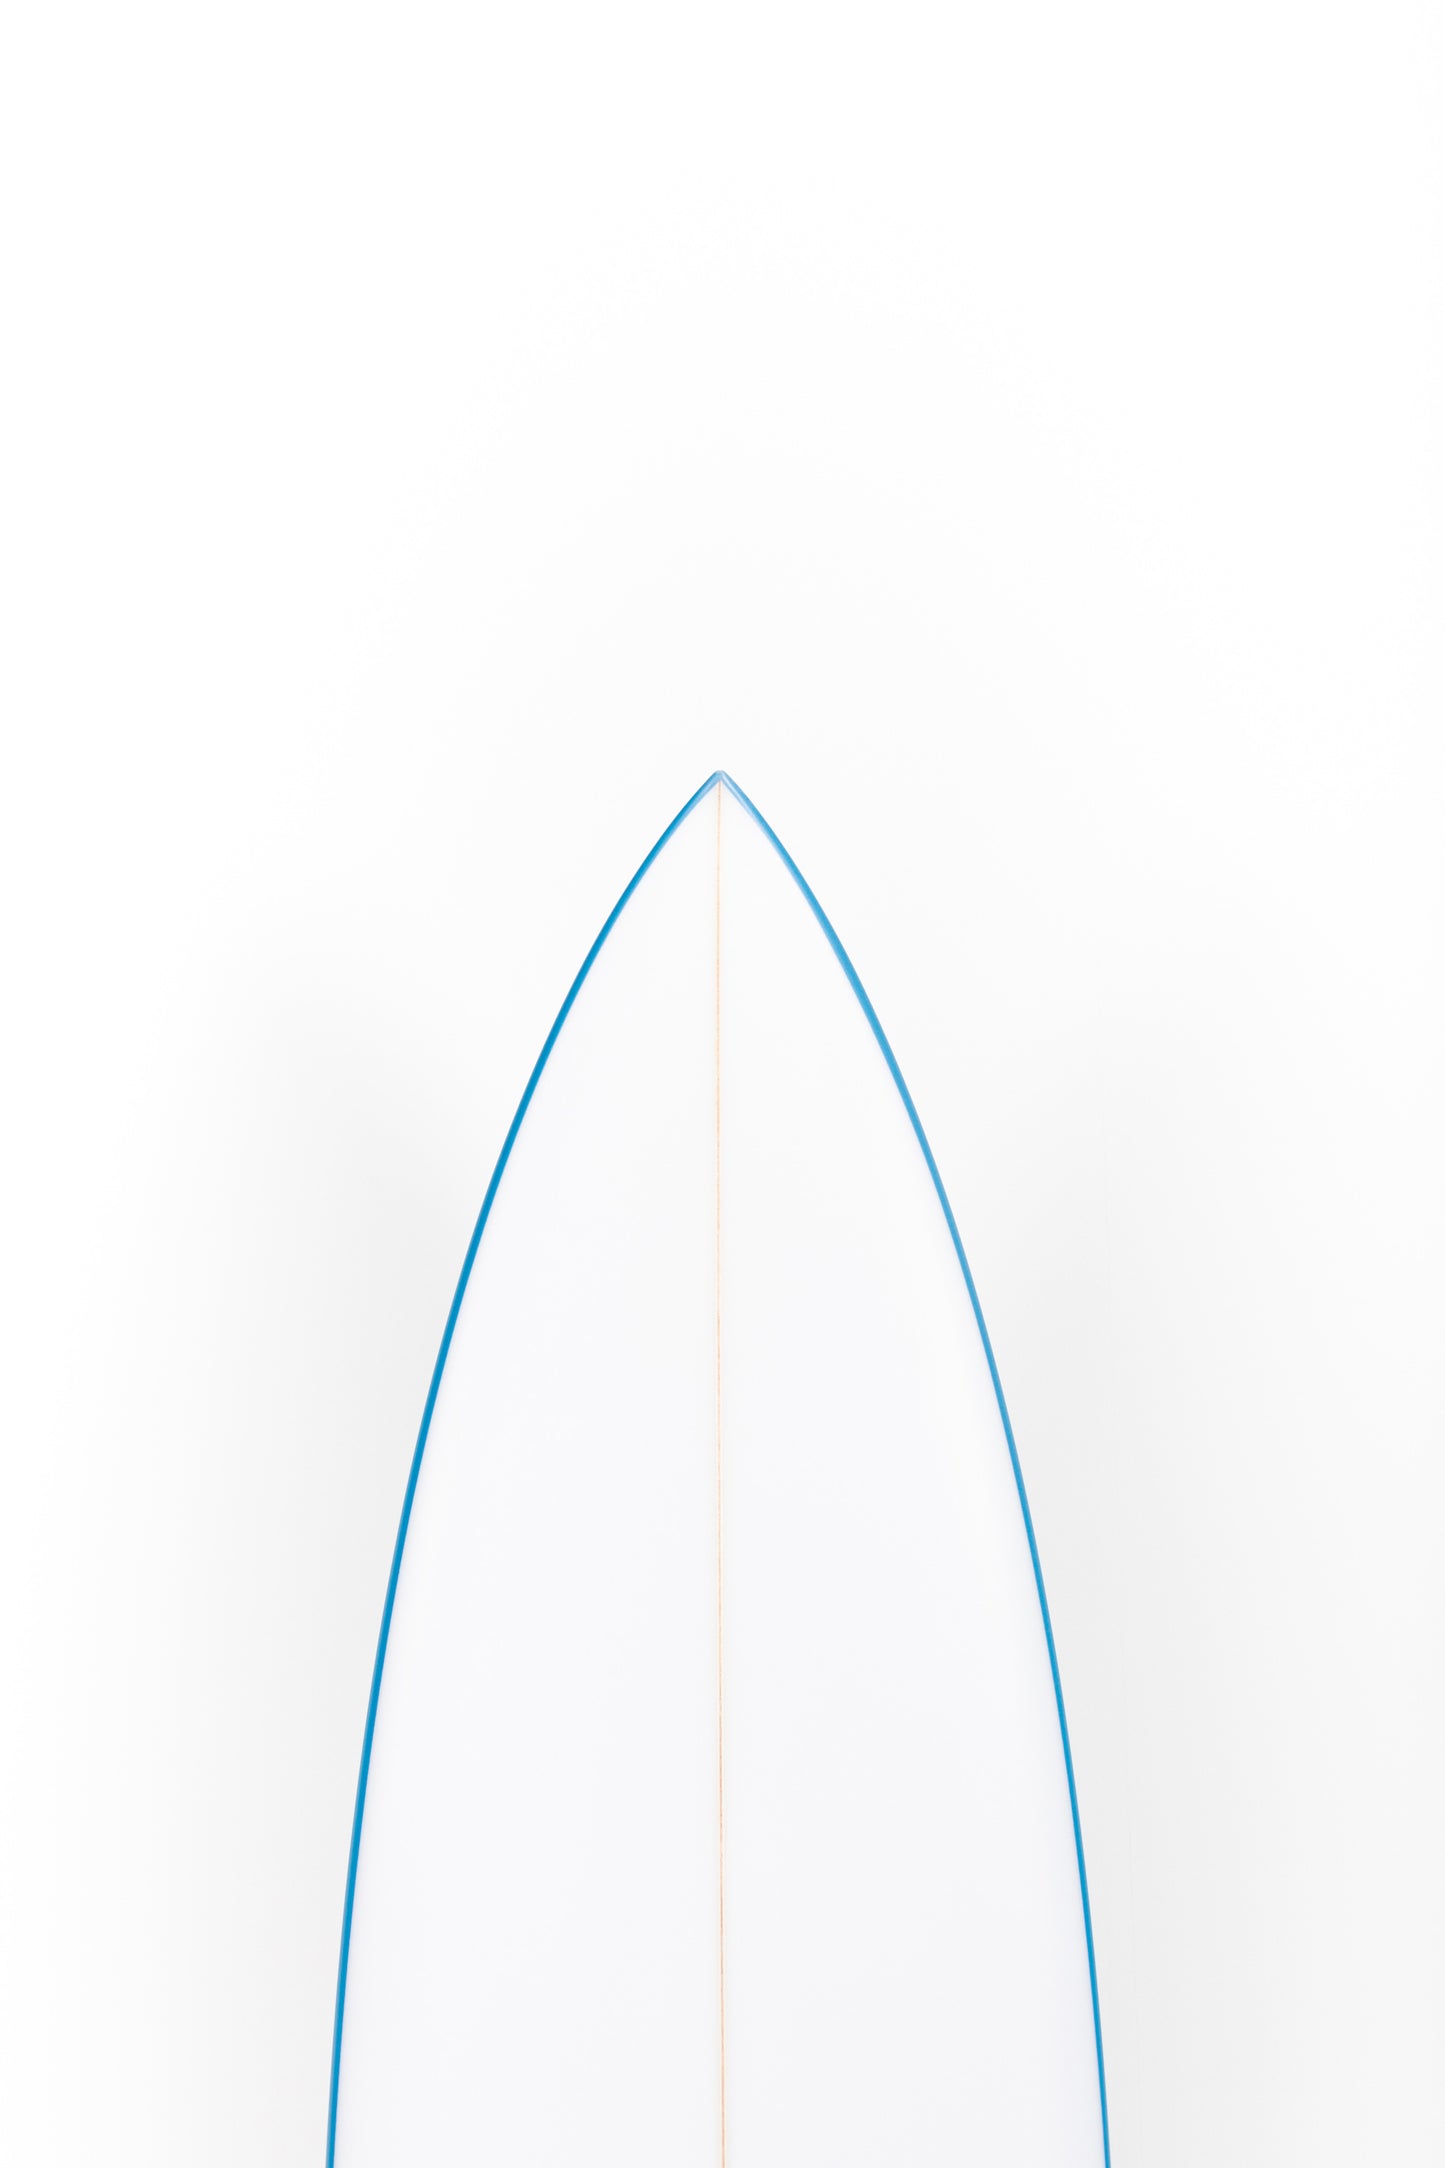 
                  
                    Pukas surf shop - Lost Surfboards - STEP DRIVER by Matt Biolos - 6'0 ” x 19 x 2,44 - 29,25L - MH16078
                  
                